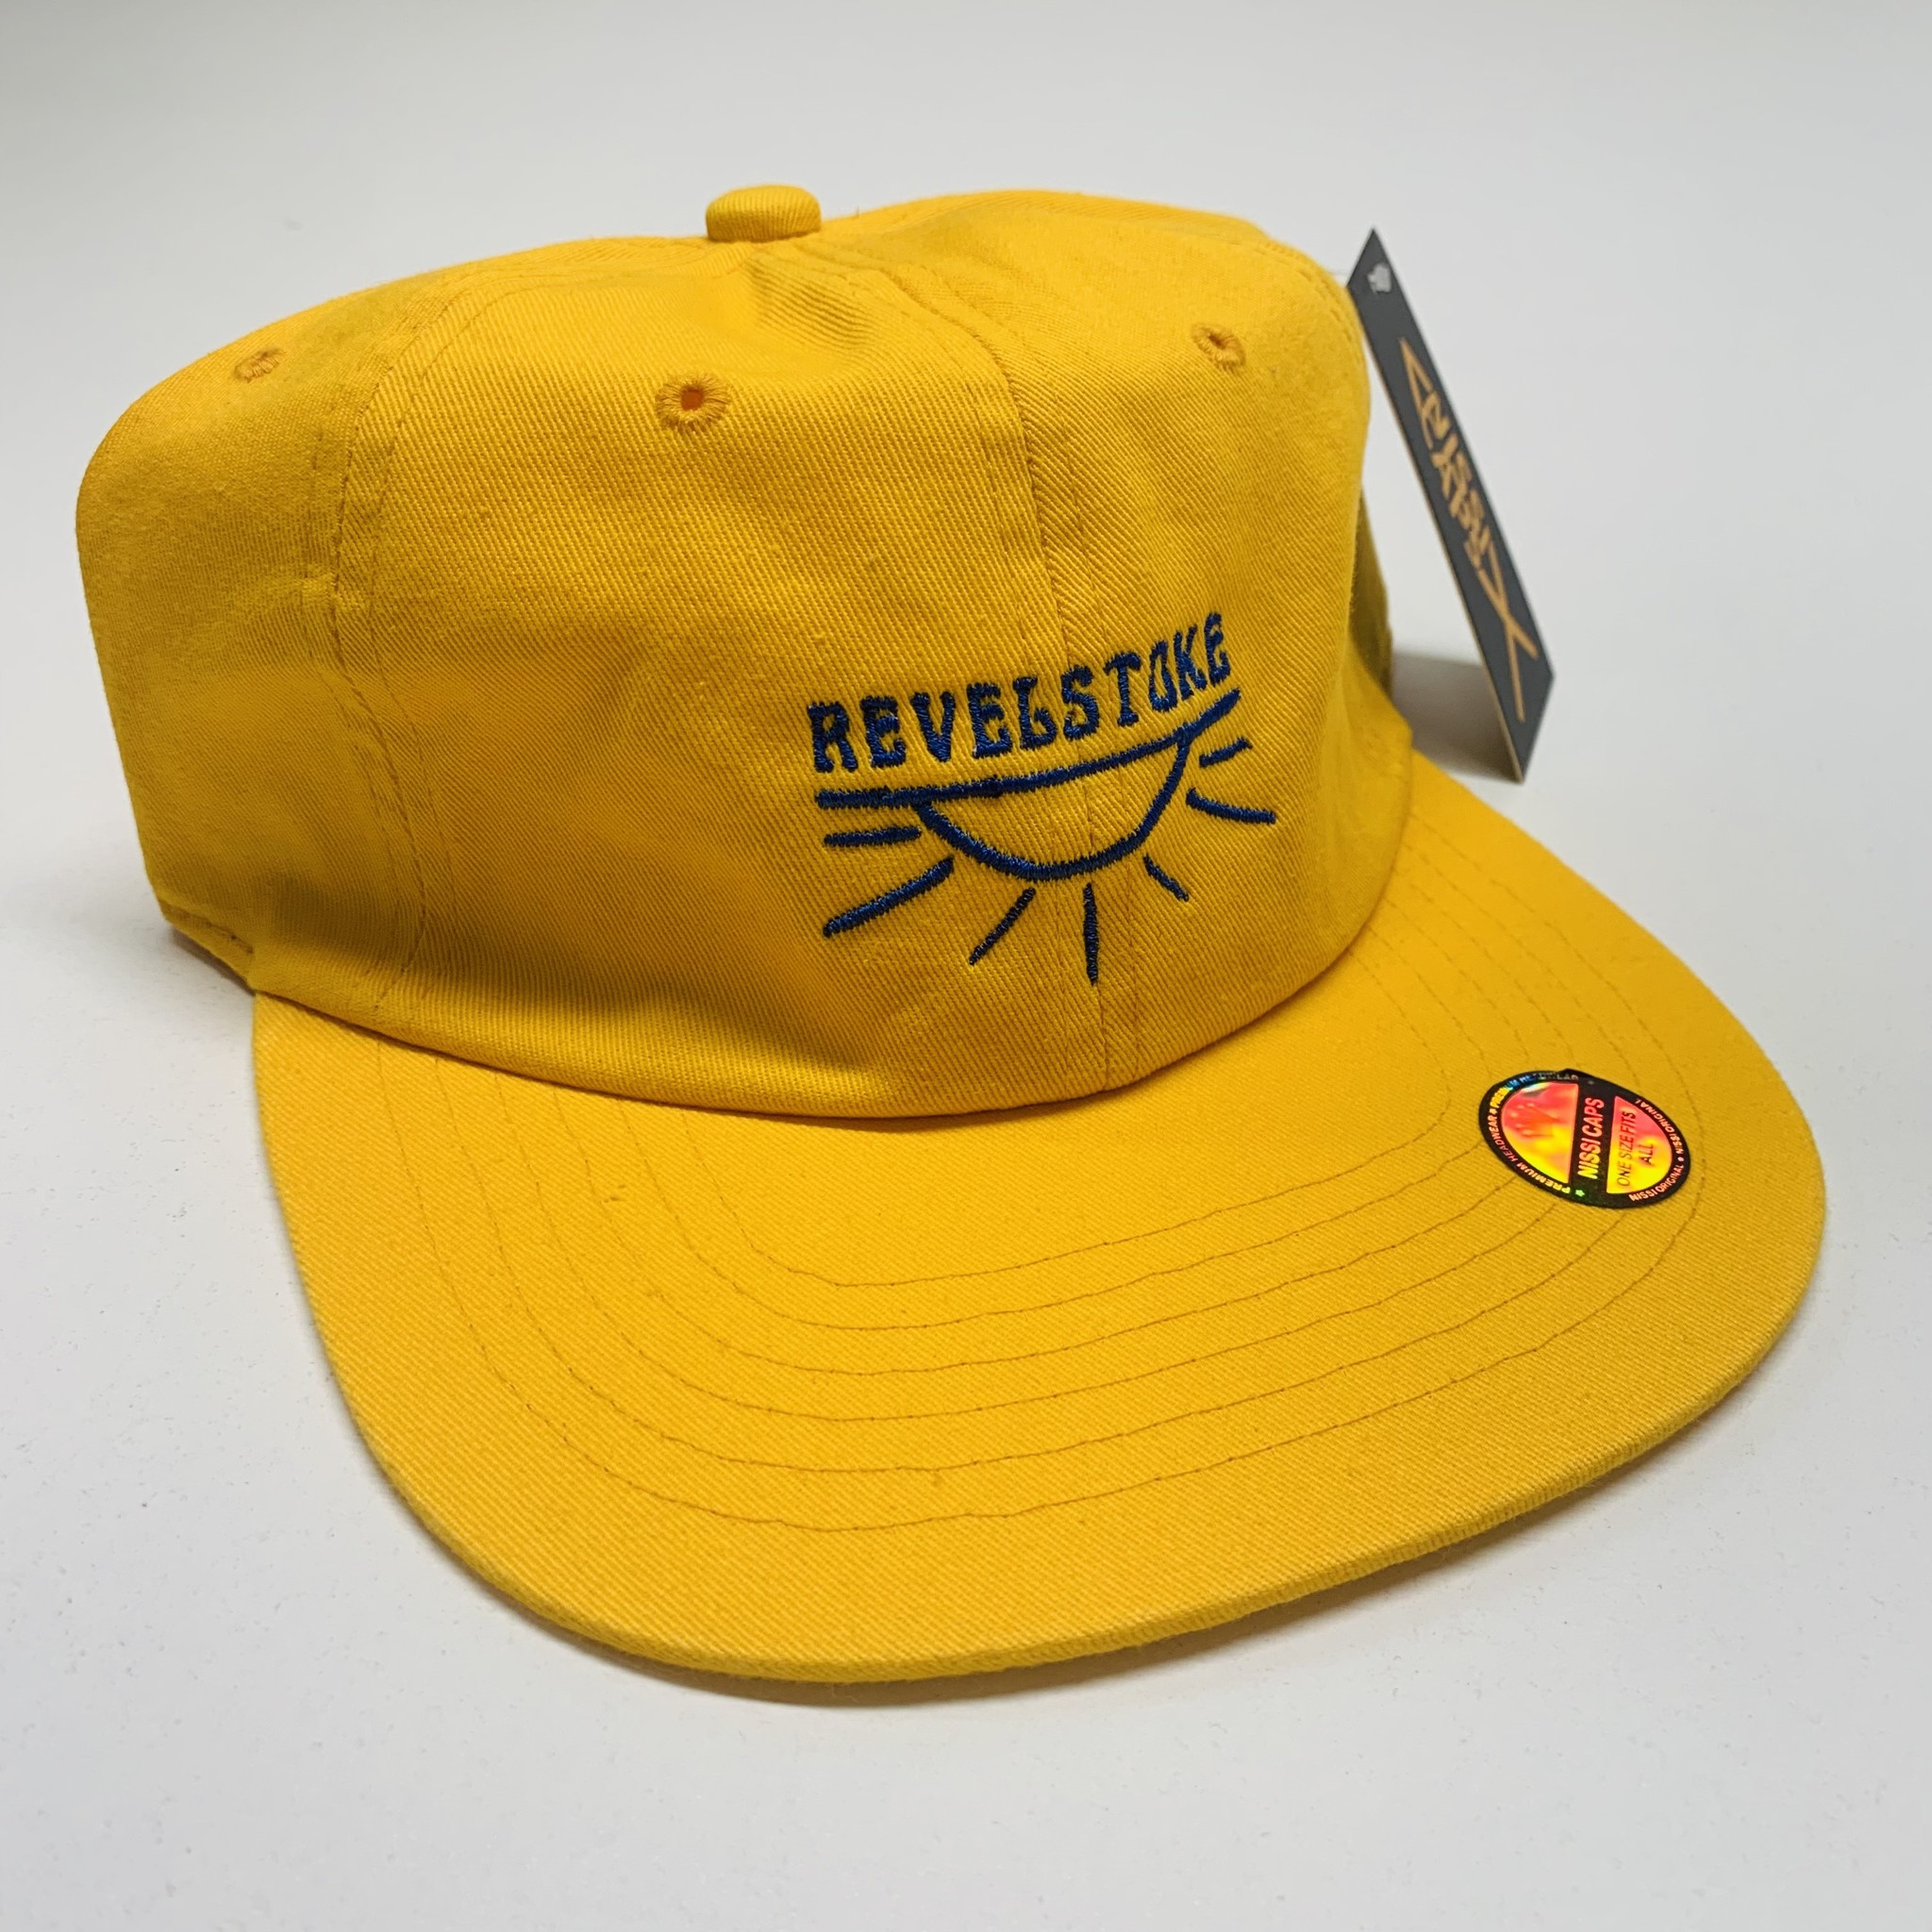 Trading Co. Revelstoke - Over Easy Cap (Yellow)